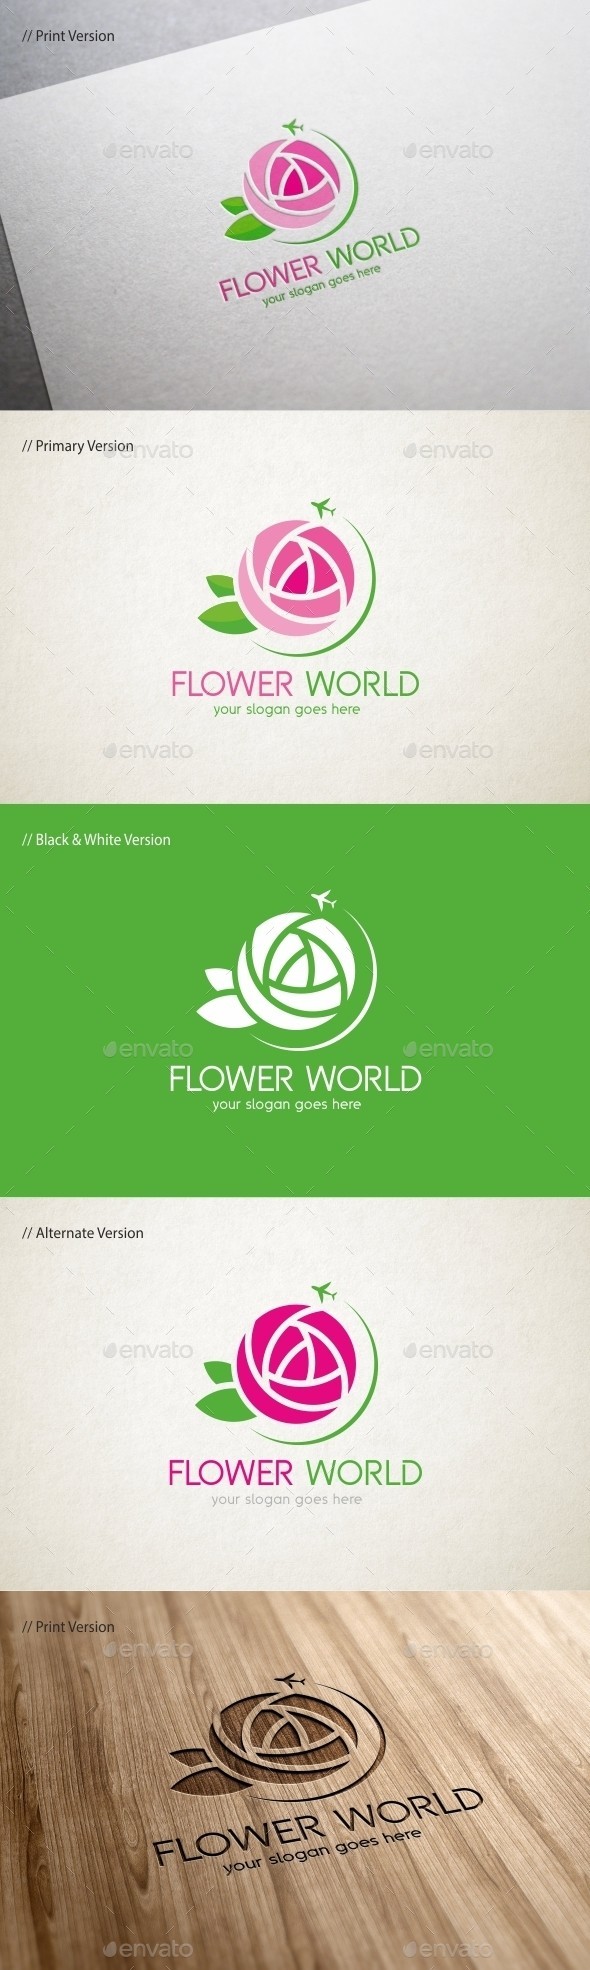 Flower 20world 20logo 20template 20590